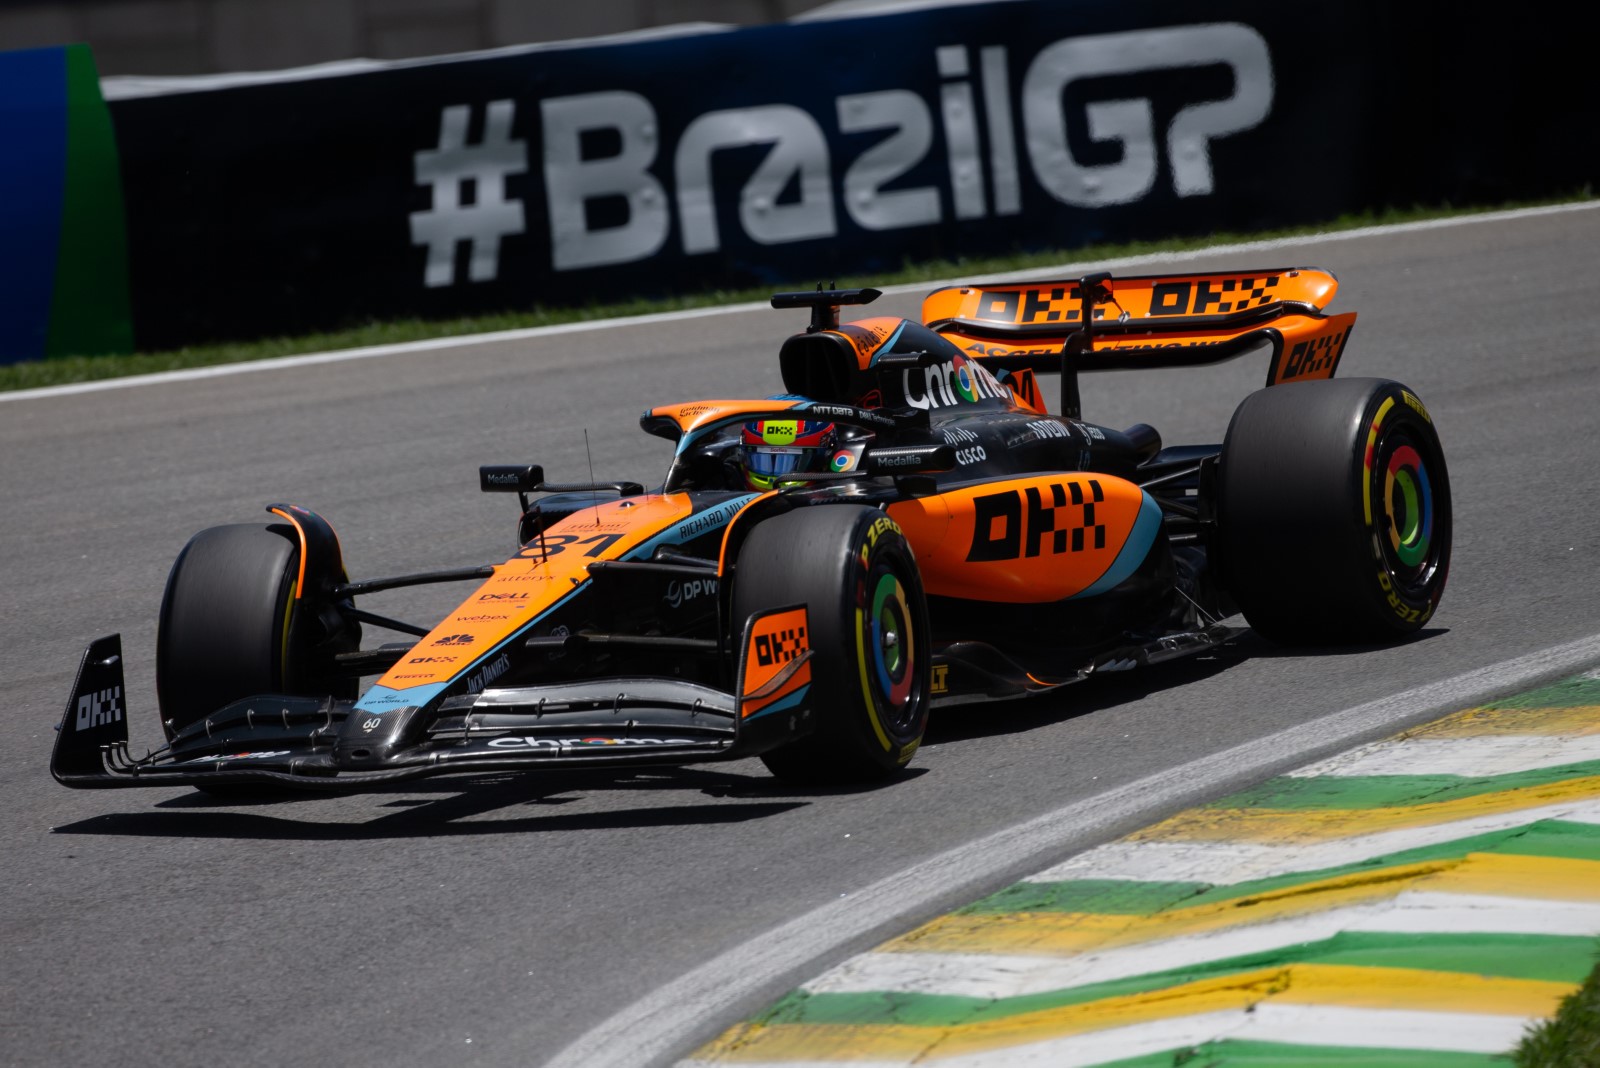 BrazilGP, McLaren, Piastri